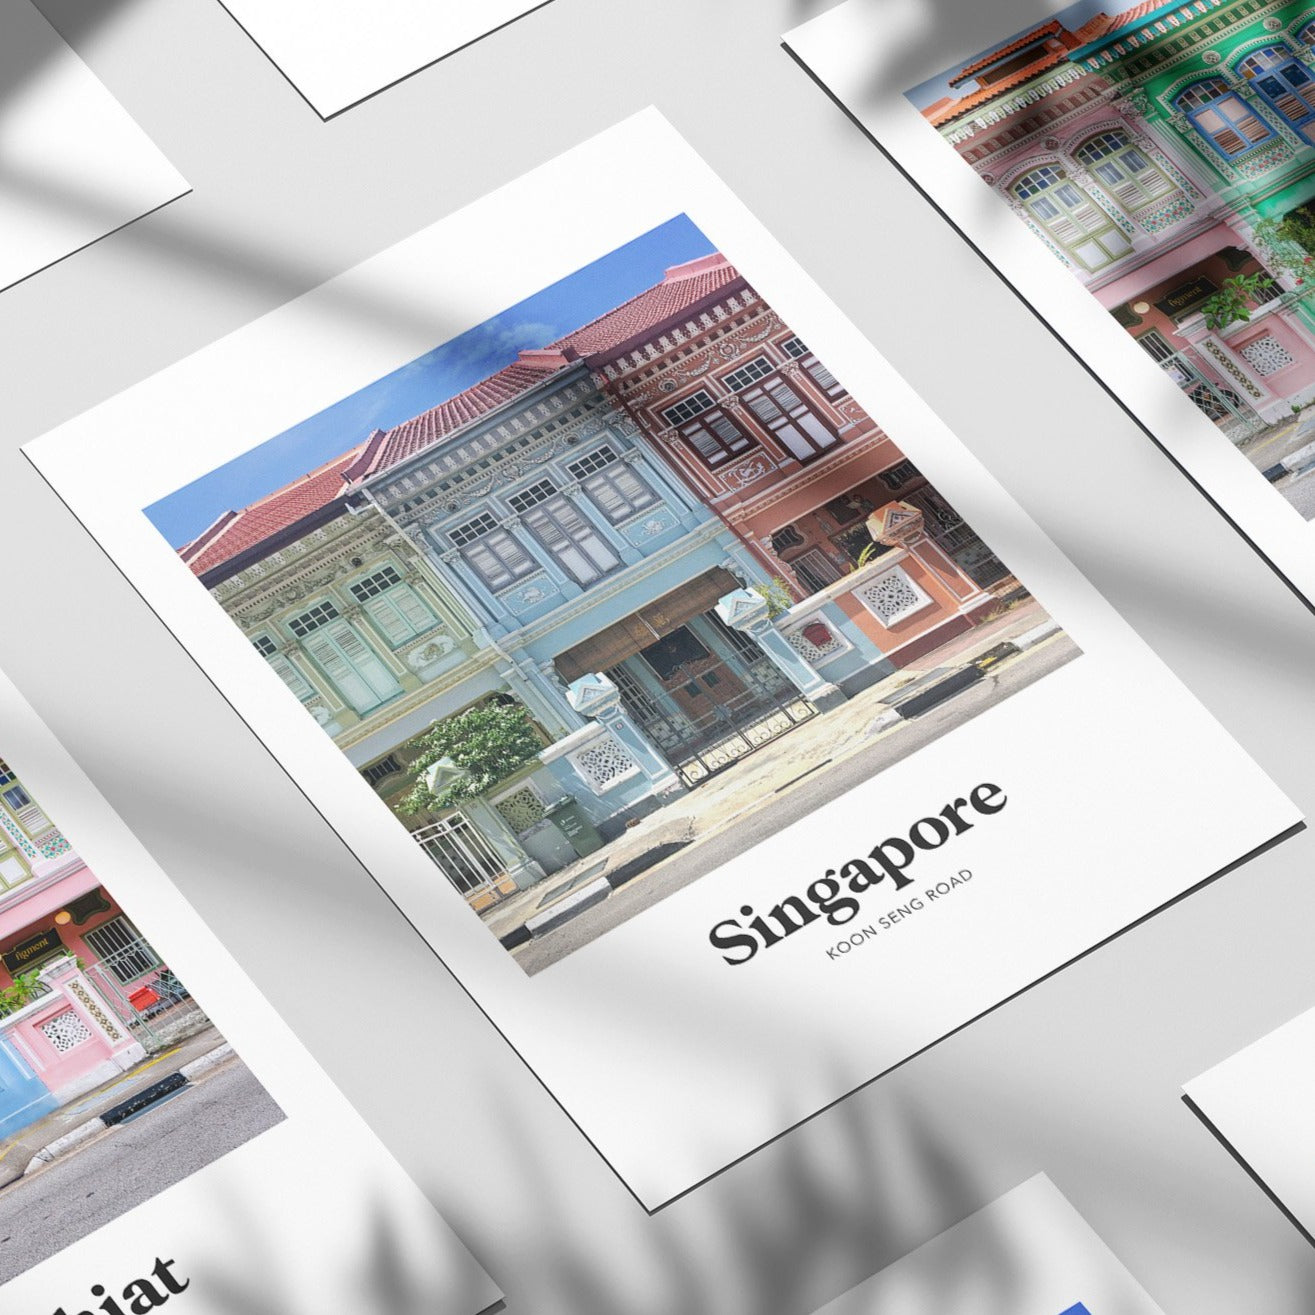 Singapore - Koon Seng Road Pastel Shophouse Print